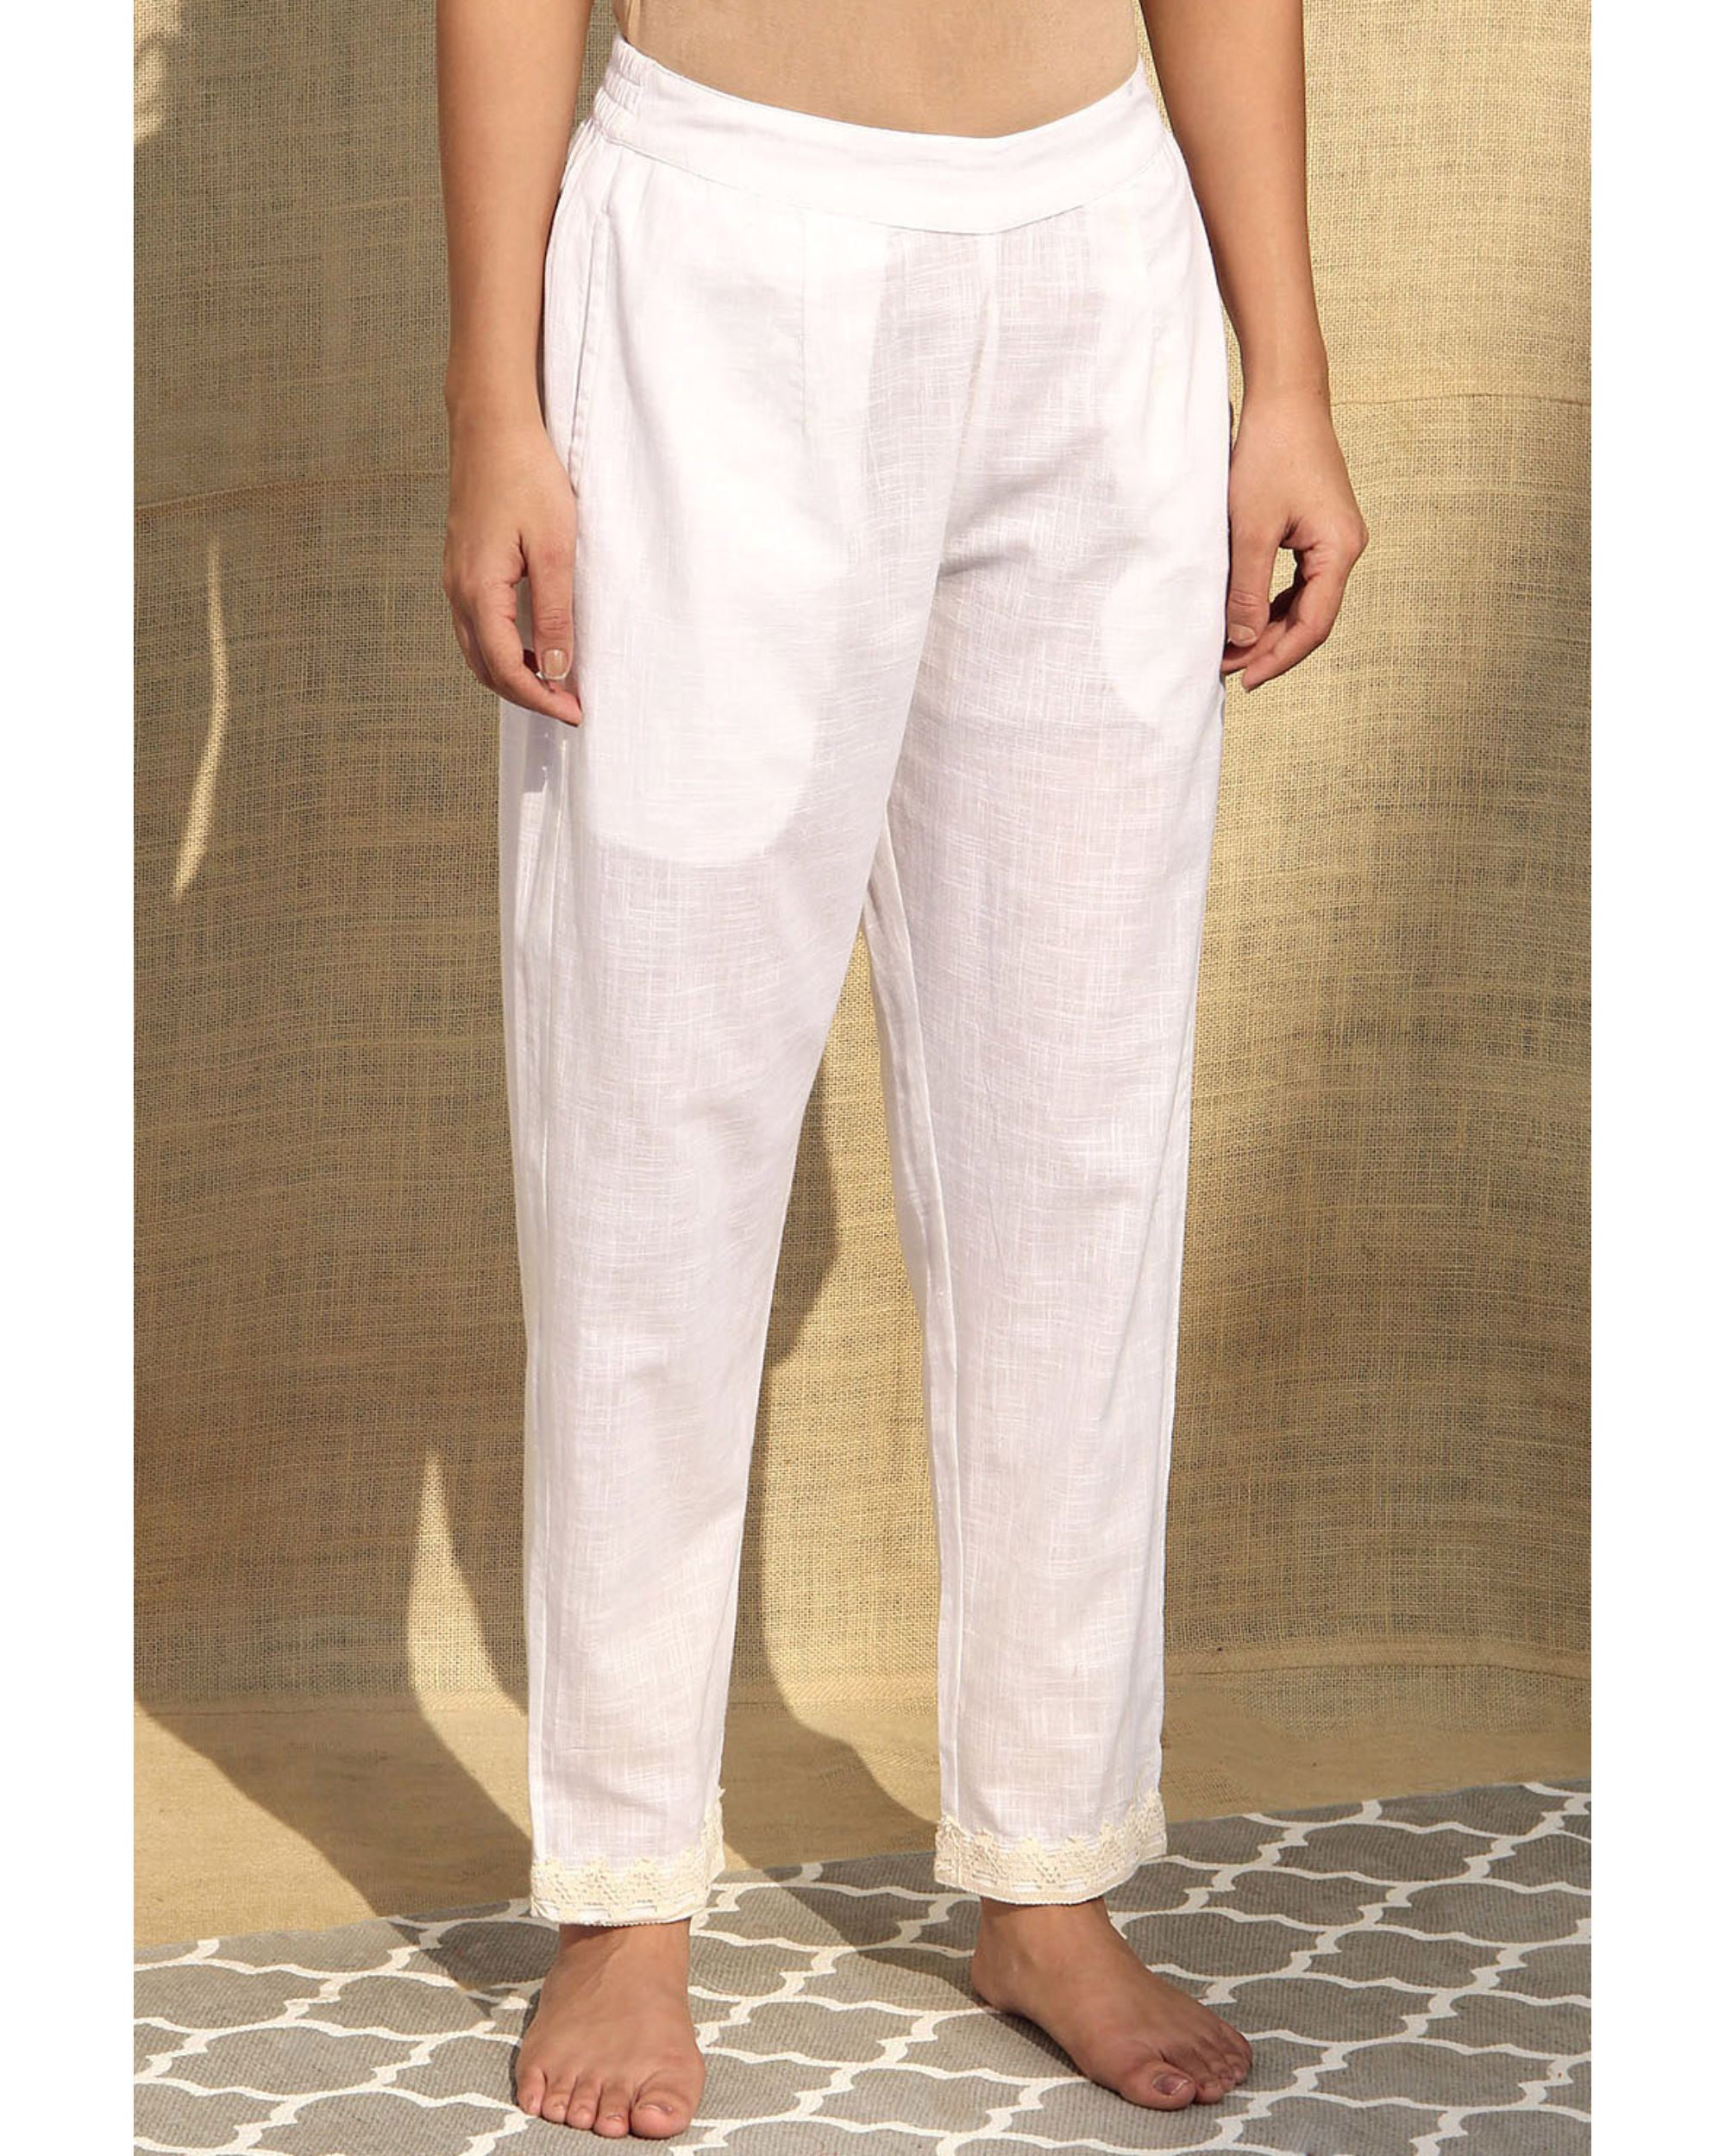 CBC VASTRA COTTON PANTS FOR WOMEN (WHITE) Women's White Summer Cotton  Trousers PANTS For Girls White